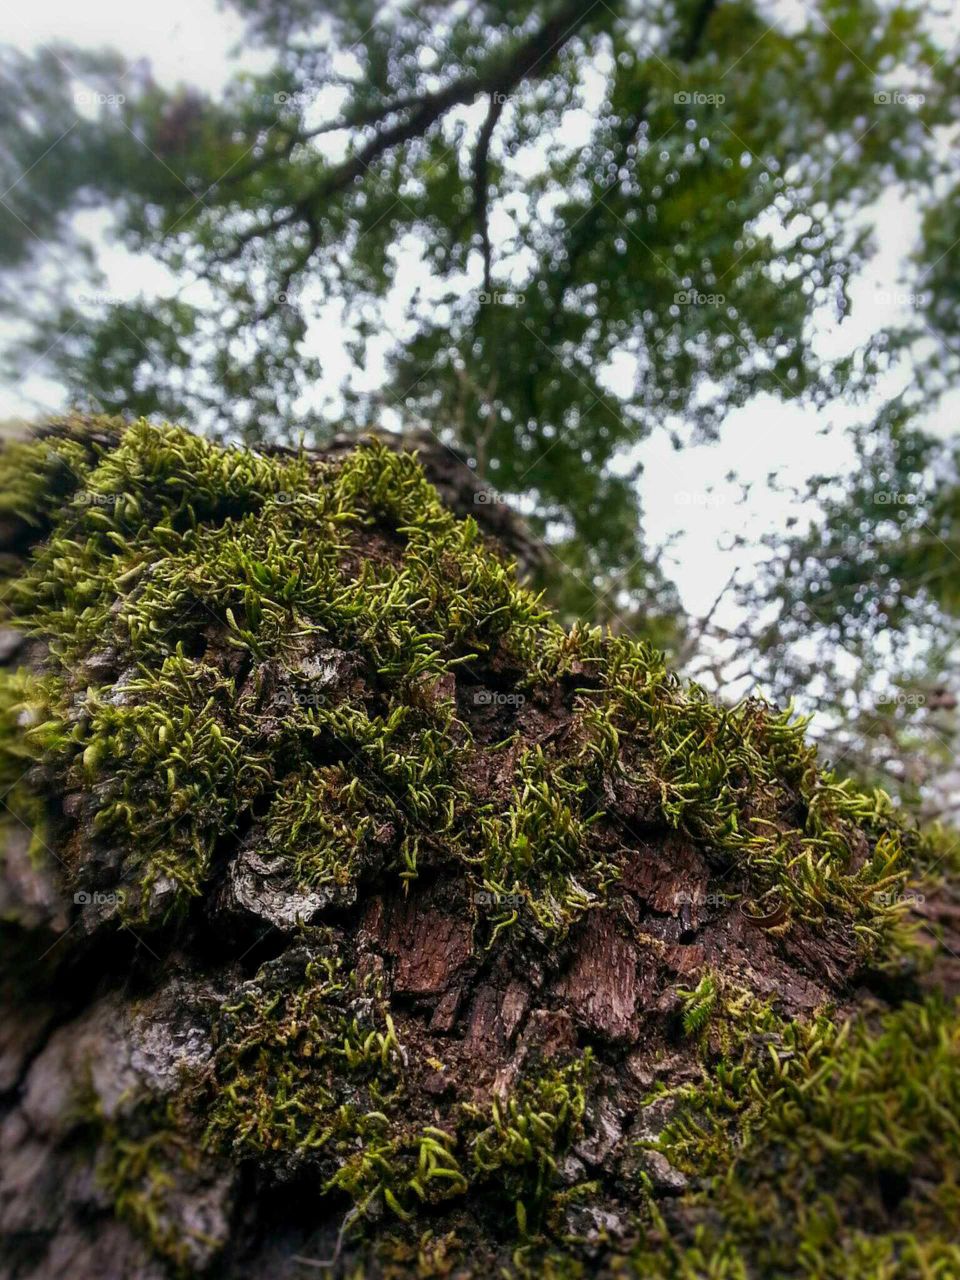 Ferns on the tree